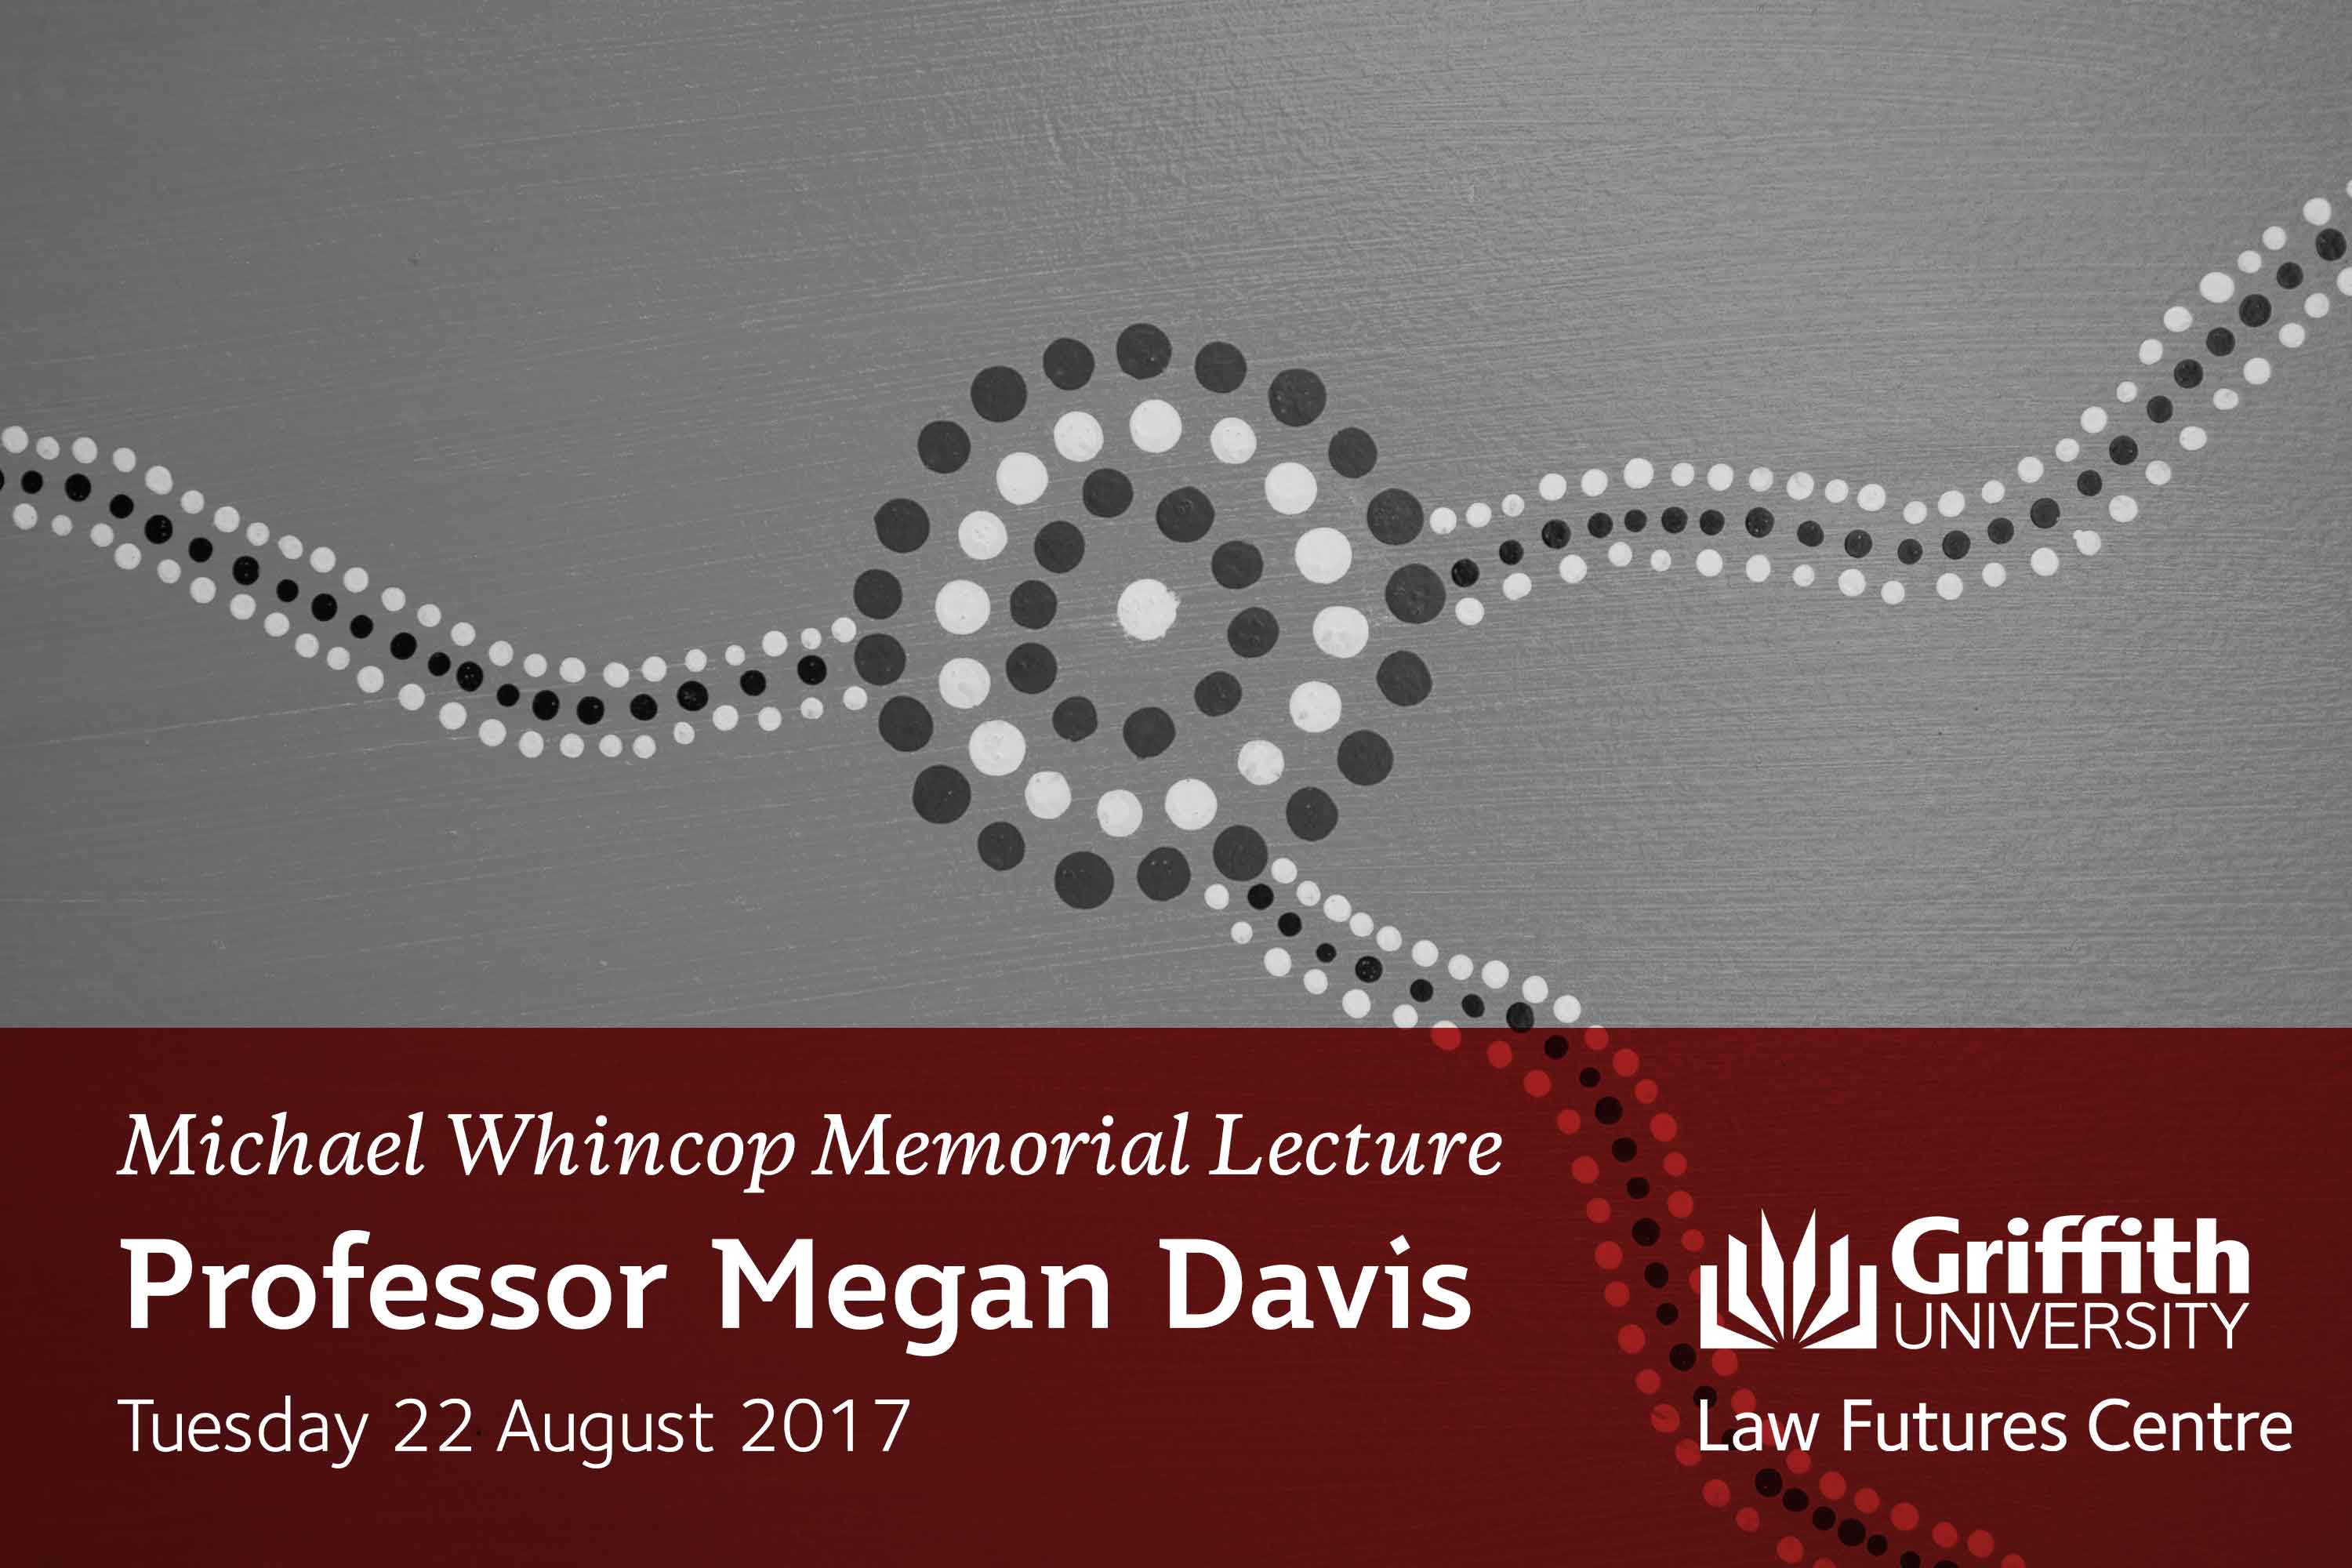 Michael Whincop Memorial Lecture by Professor Megan Davis